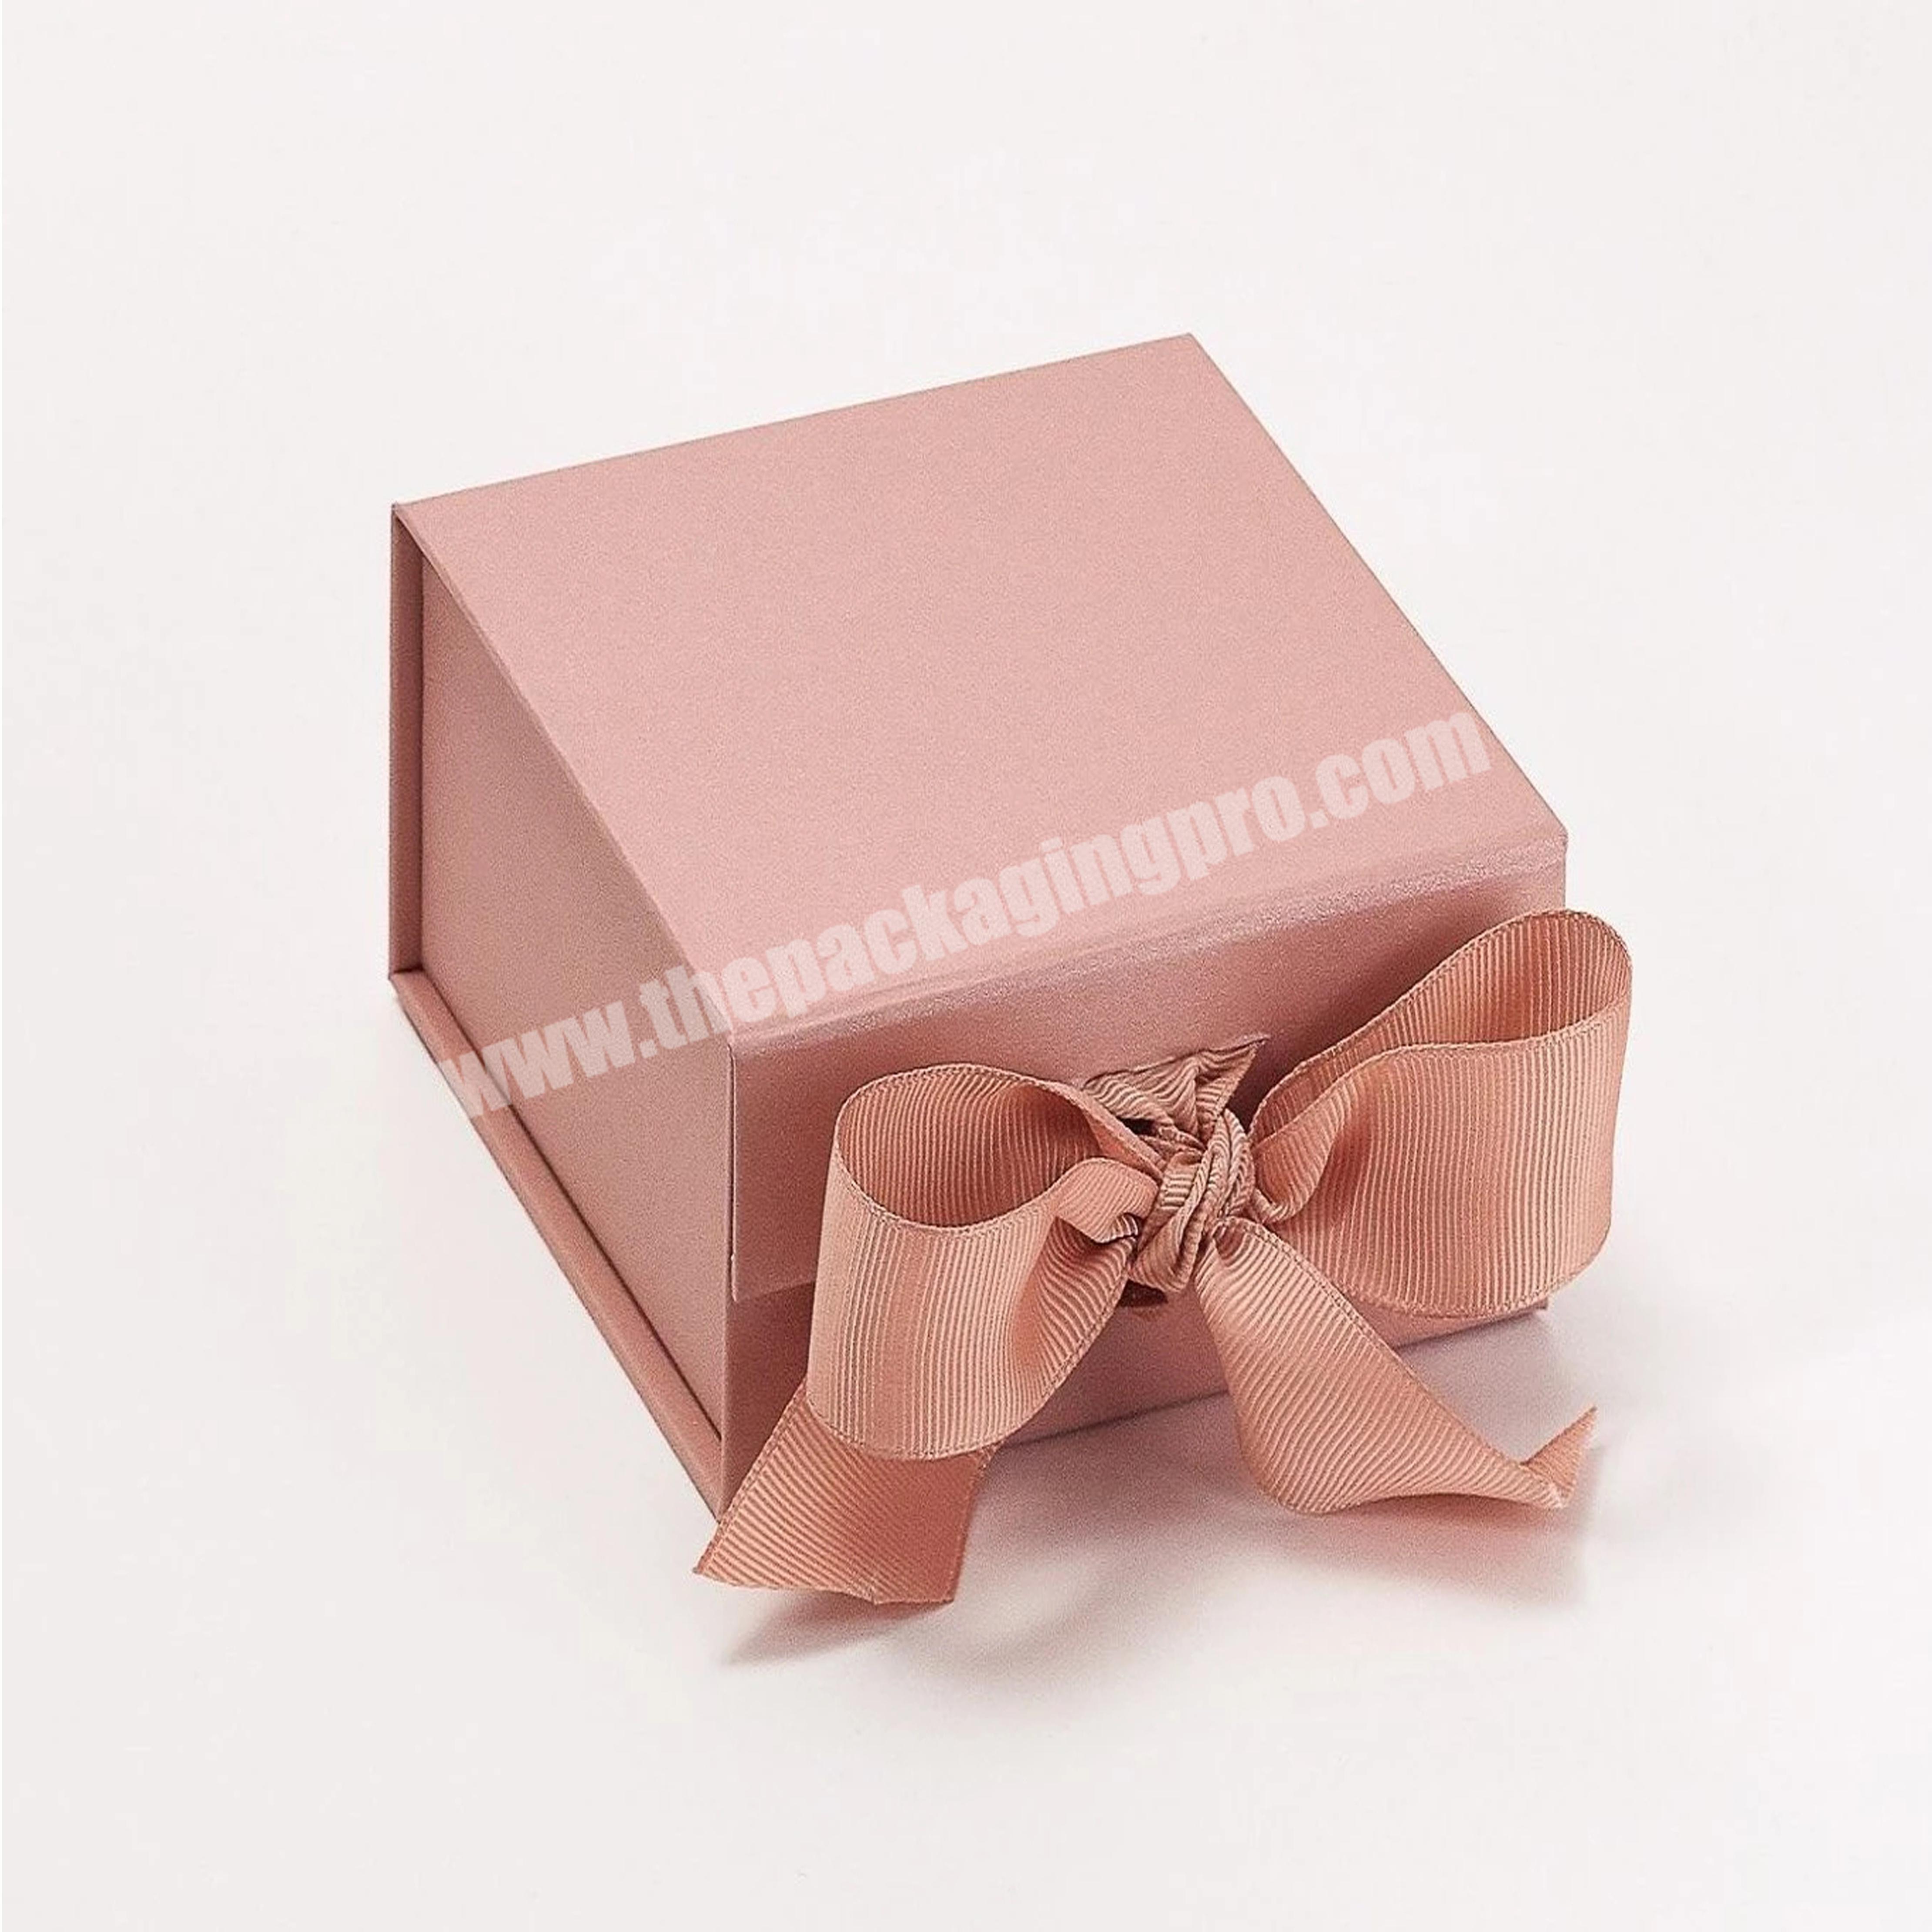 custom square shape matt pink compact powder blush gift box with pink ribbon closure